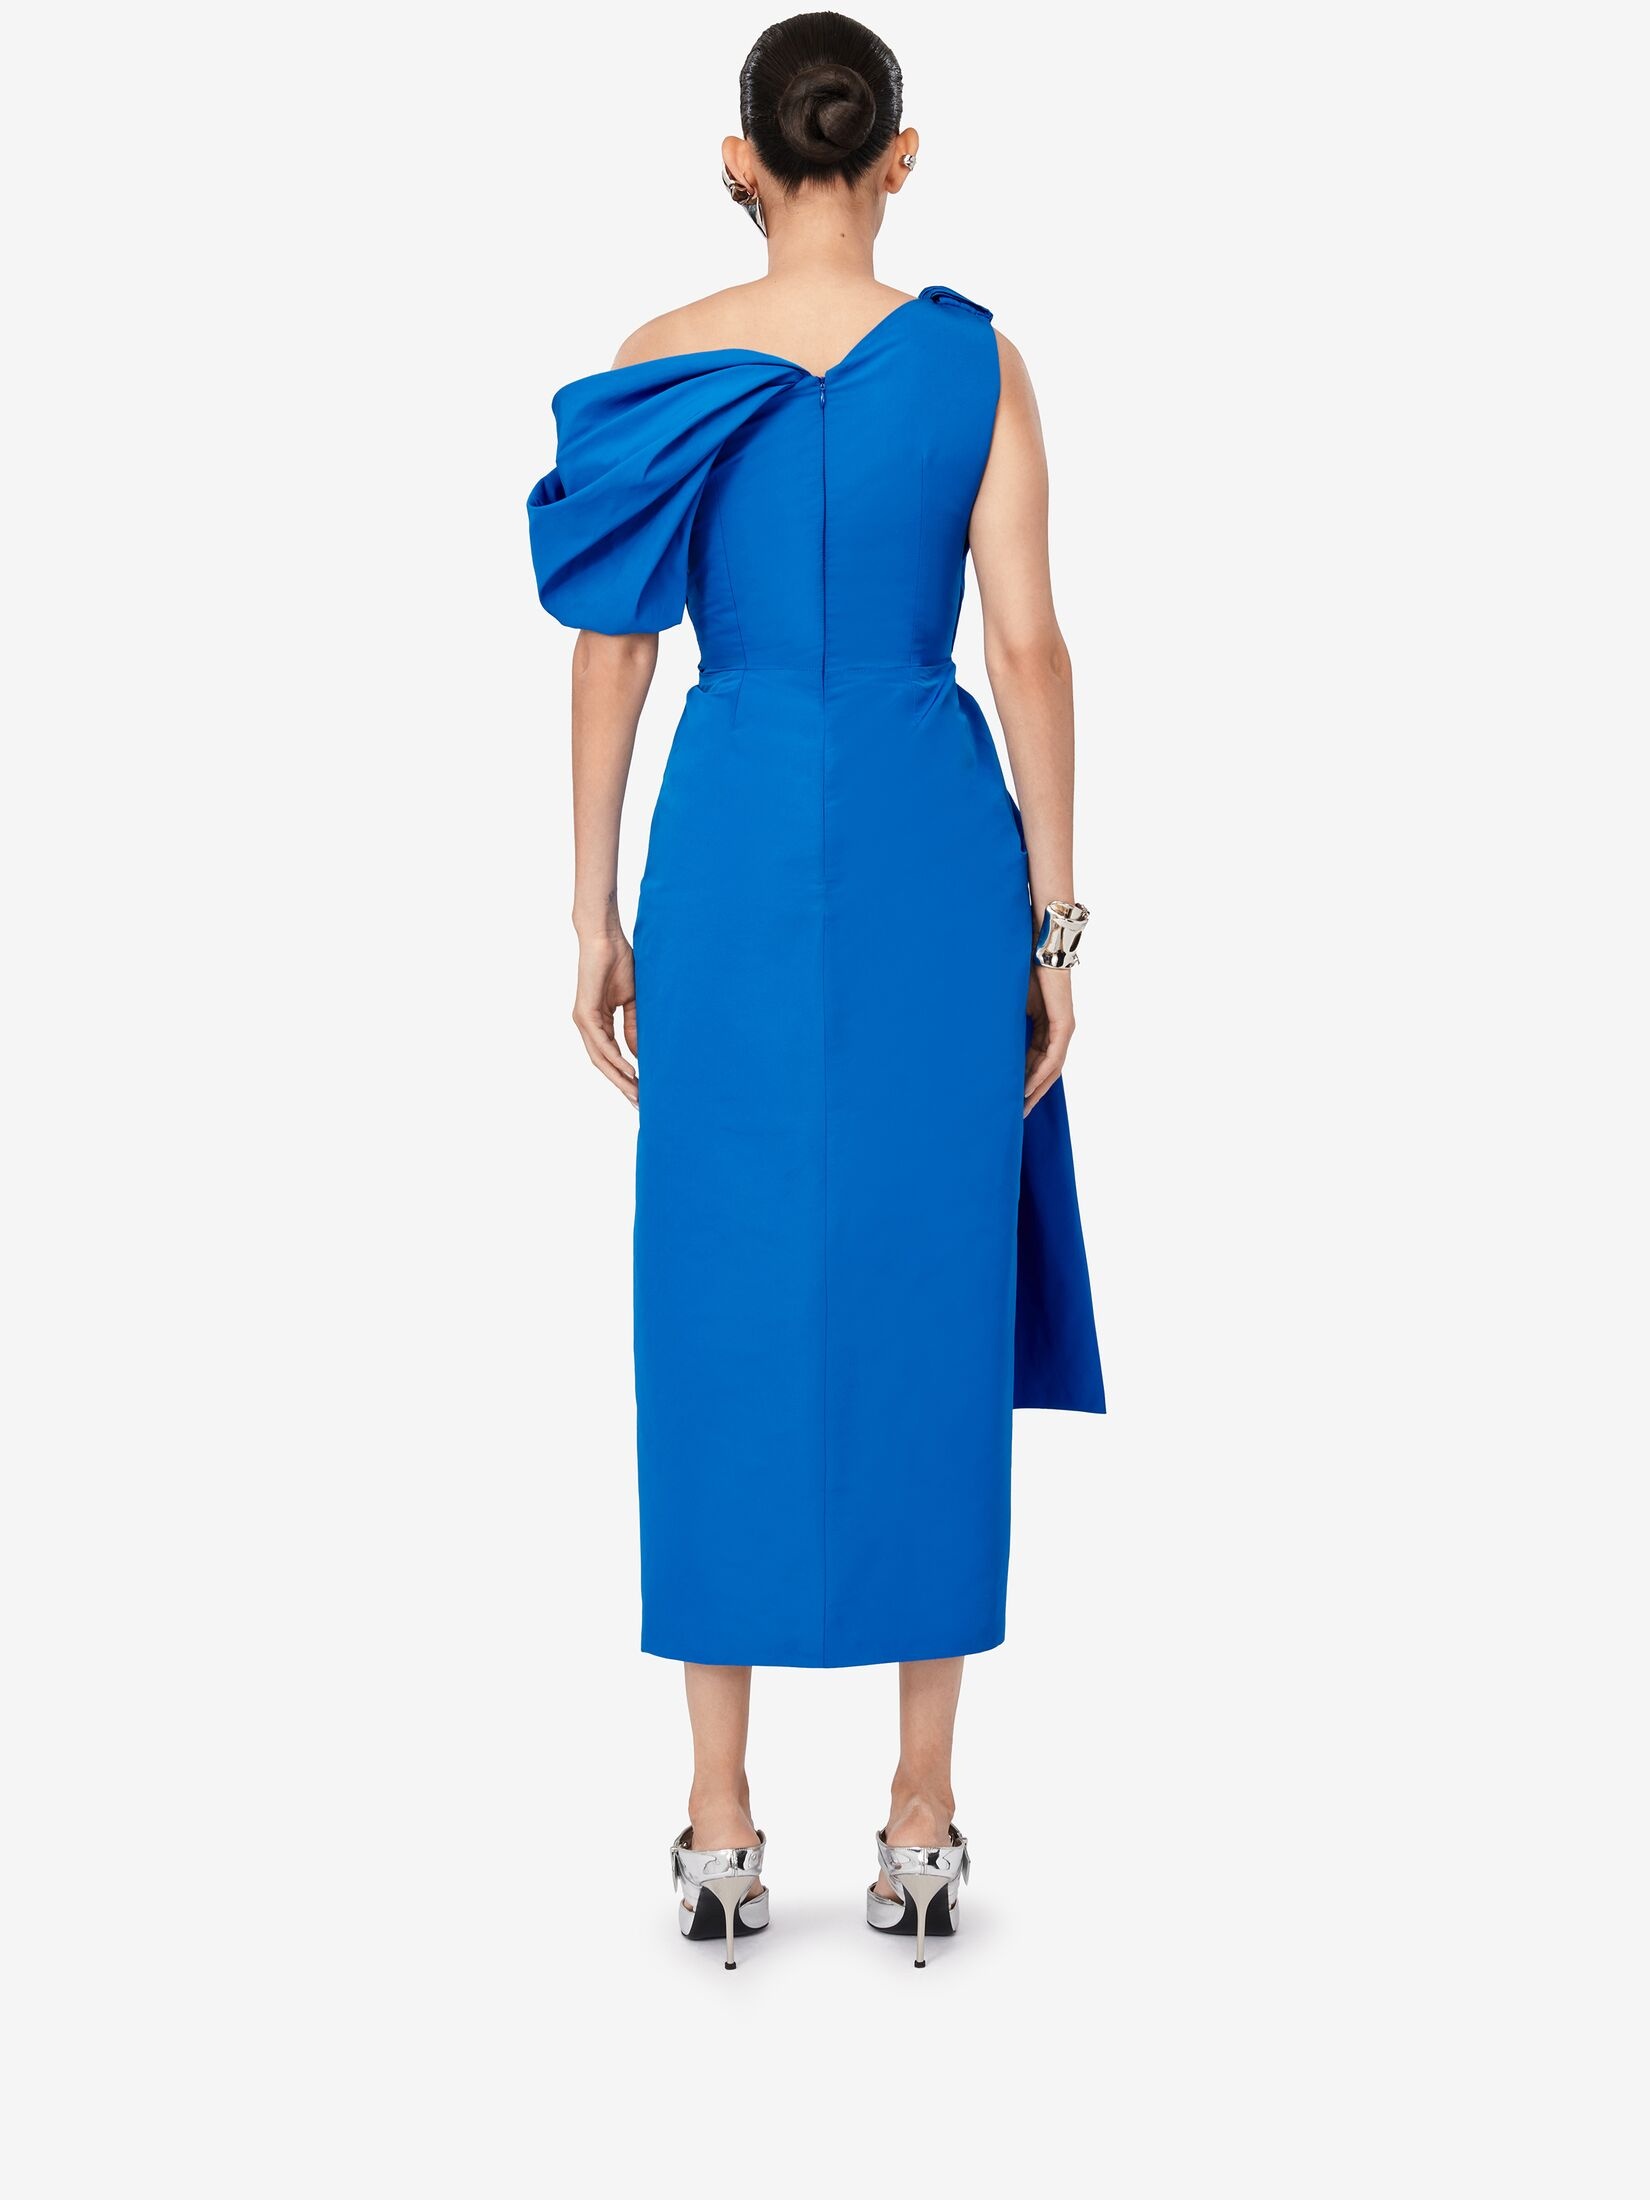 Women's Knotted Asymmetric Pencil Dress in Lapis Blue - 4